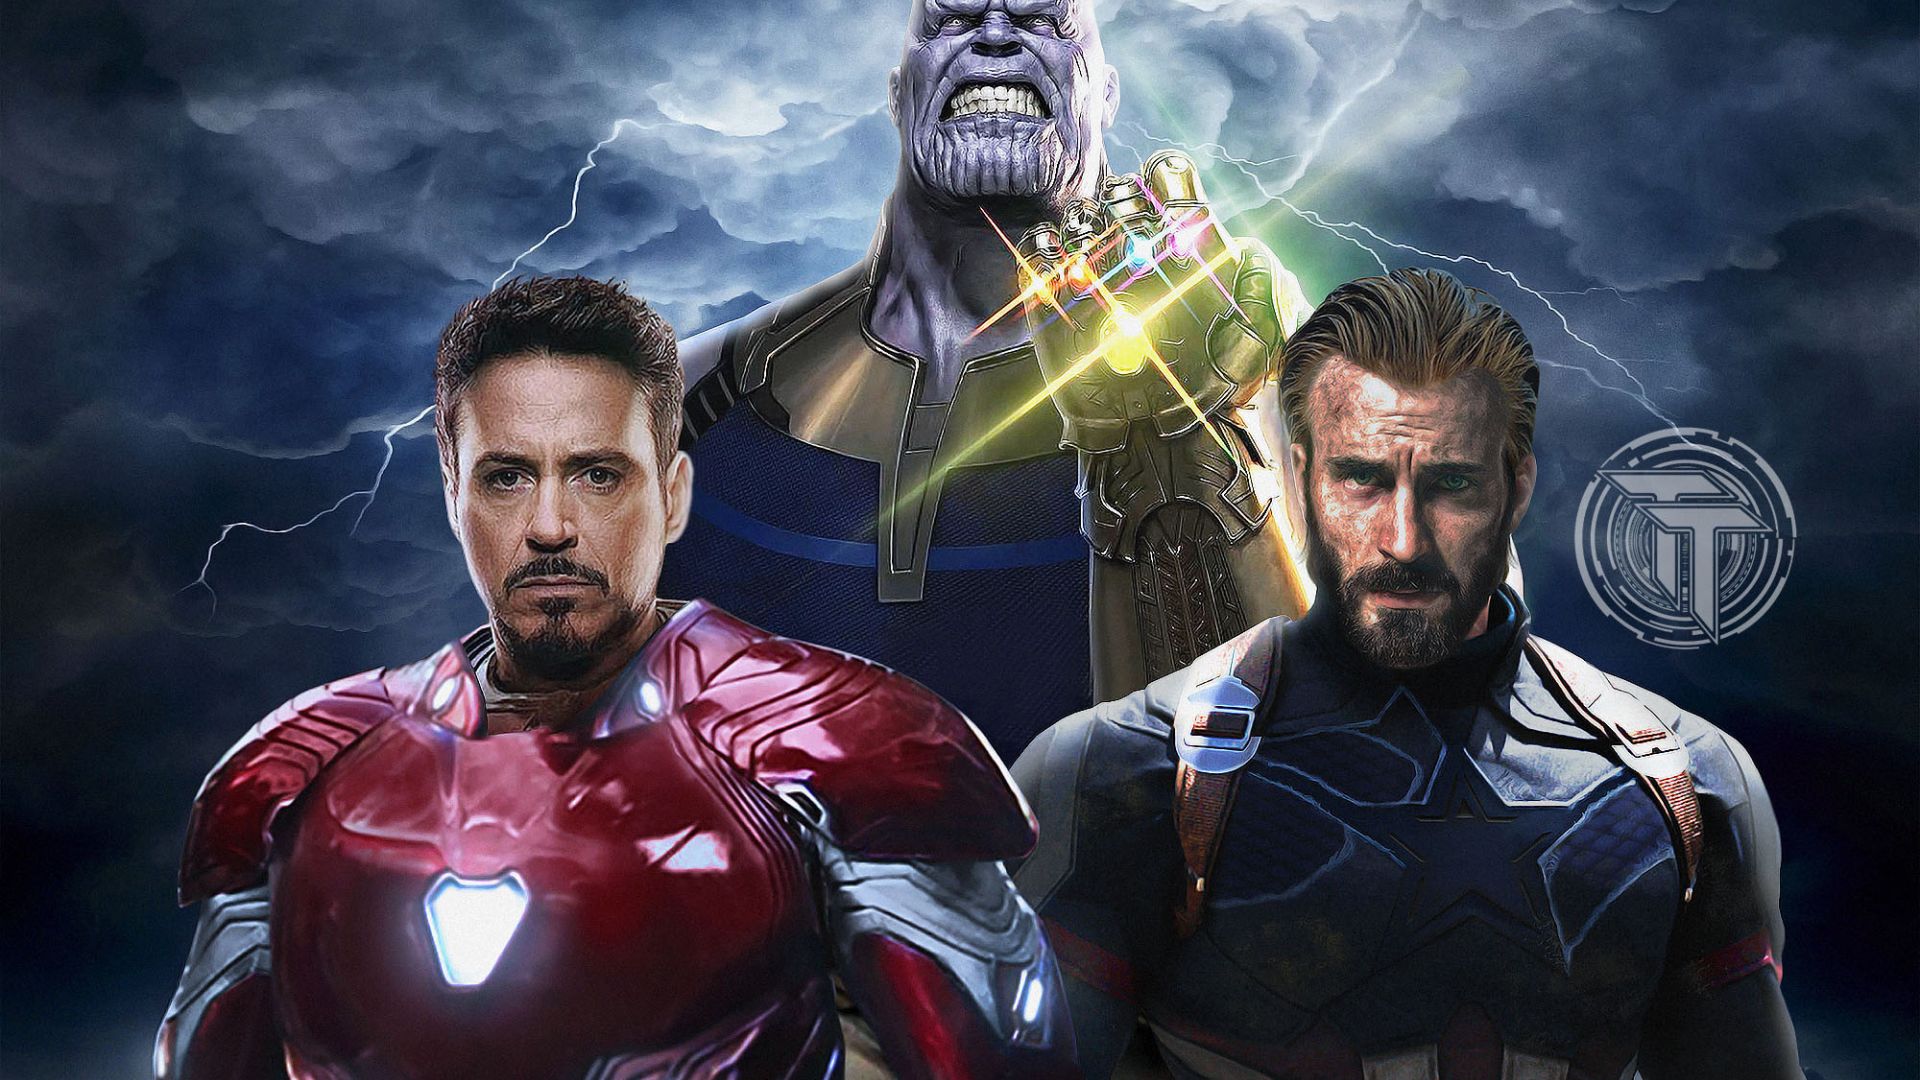 Desktop Wallpaper Avengers: Infinity War, Captain America, Iron Man,  Thanos, Hd Image, Picture, Background, A4c877